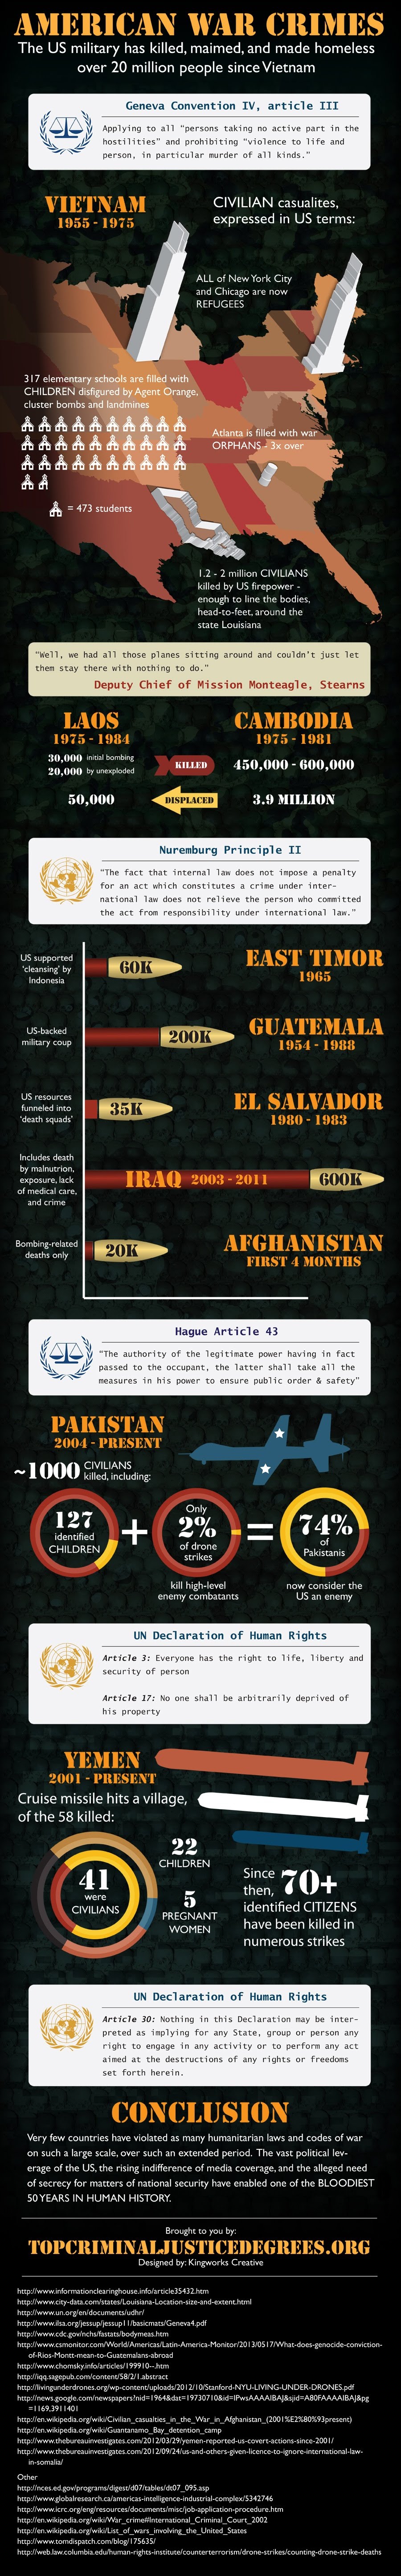 American War Crimes #infographic